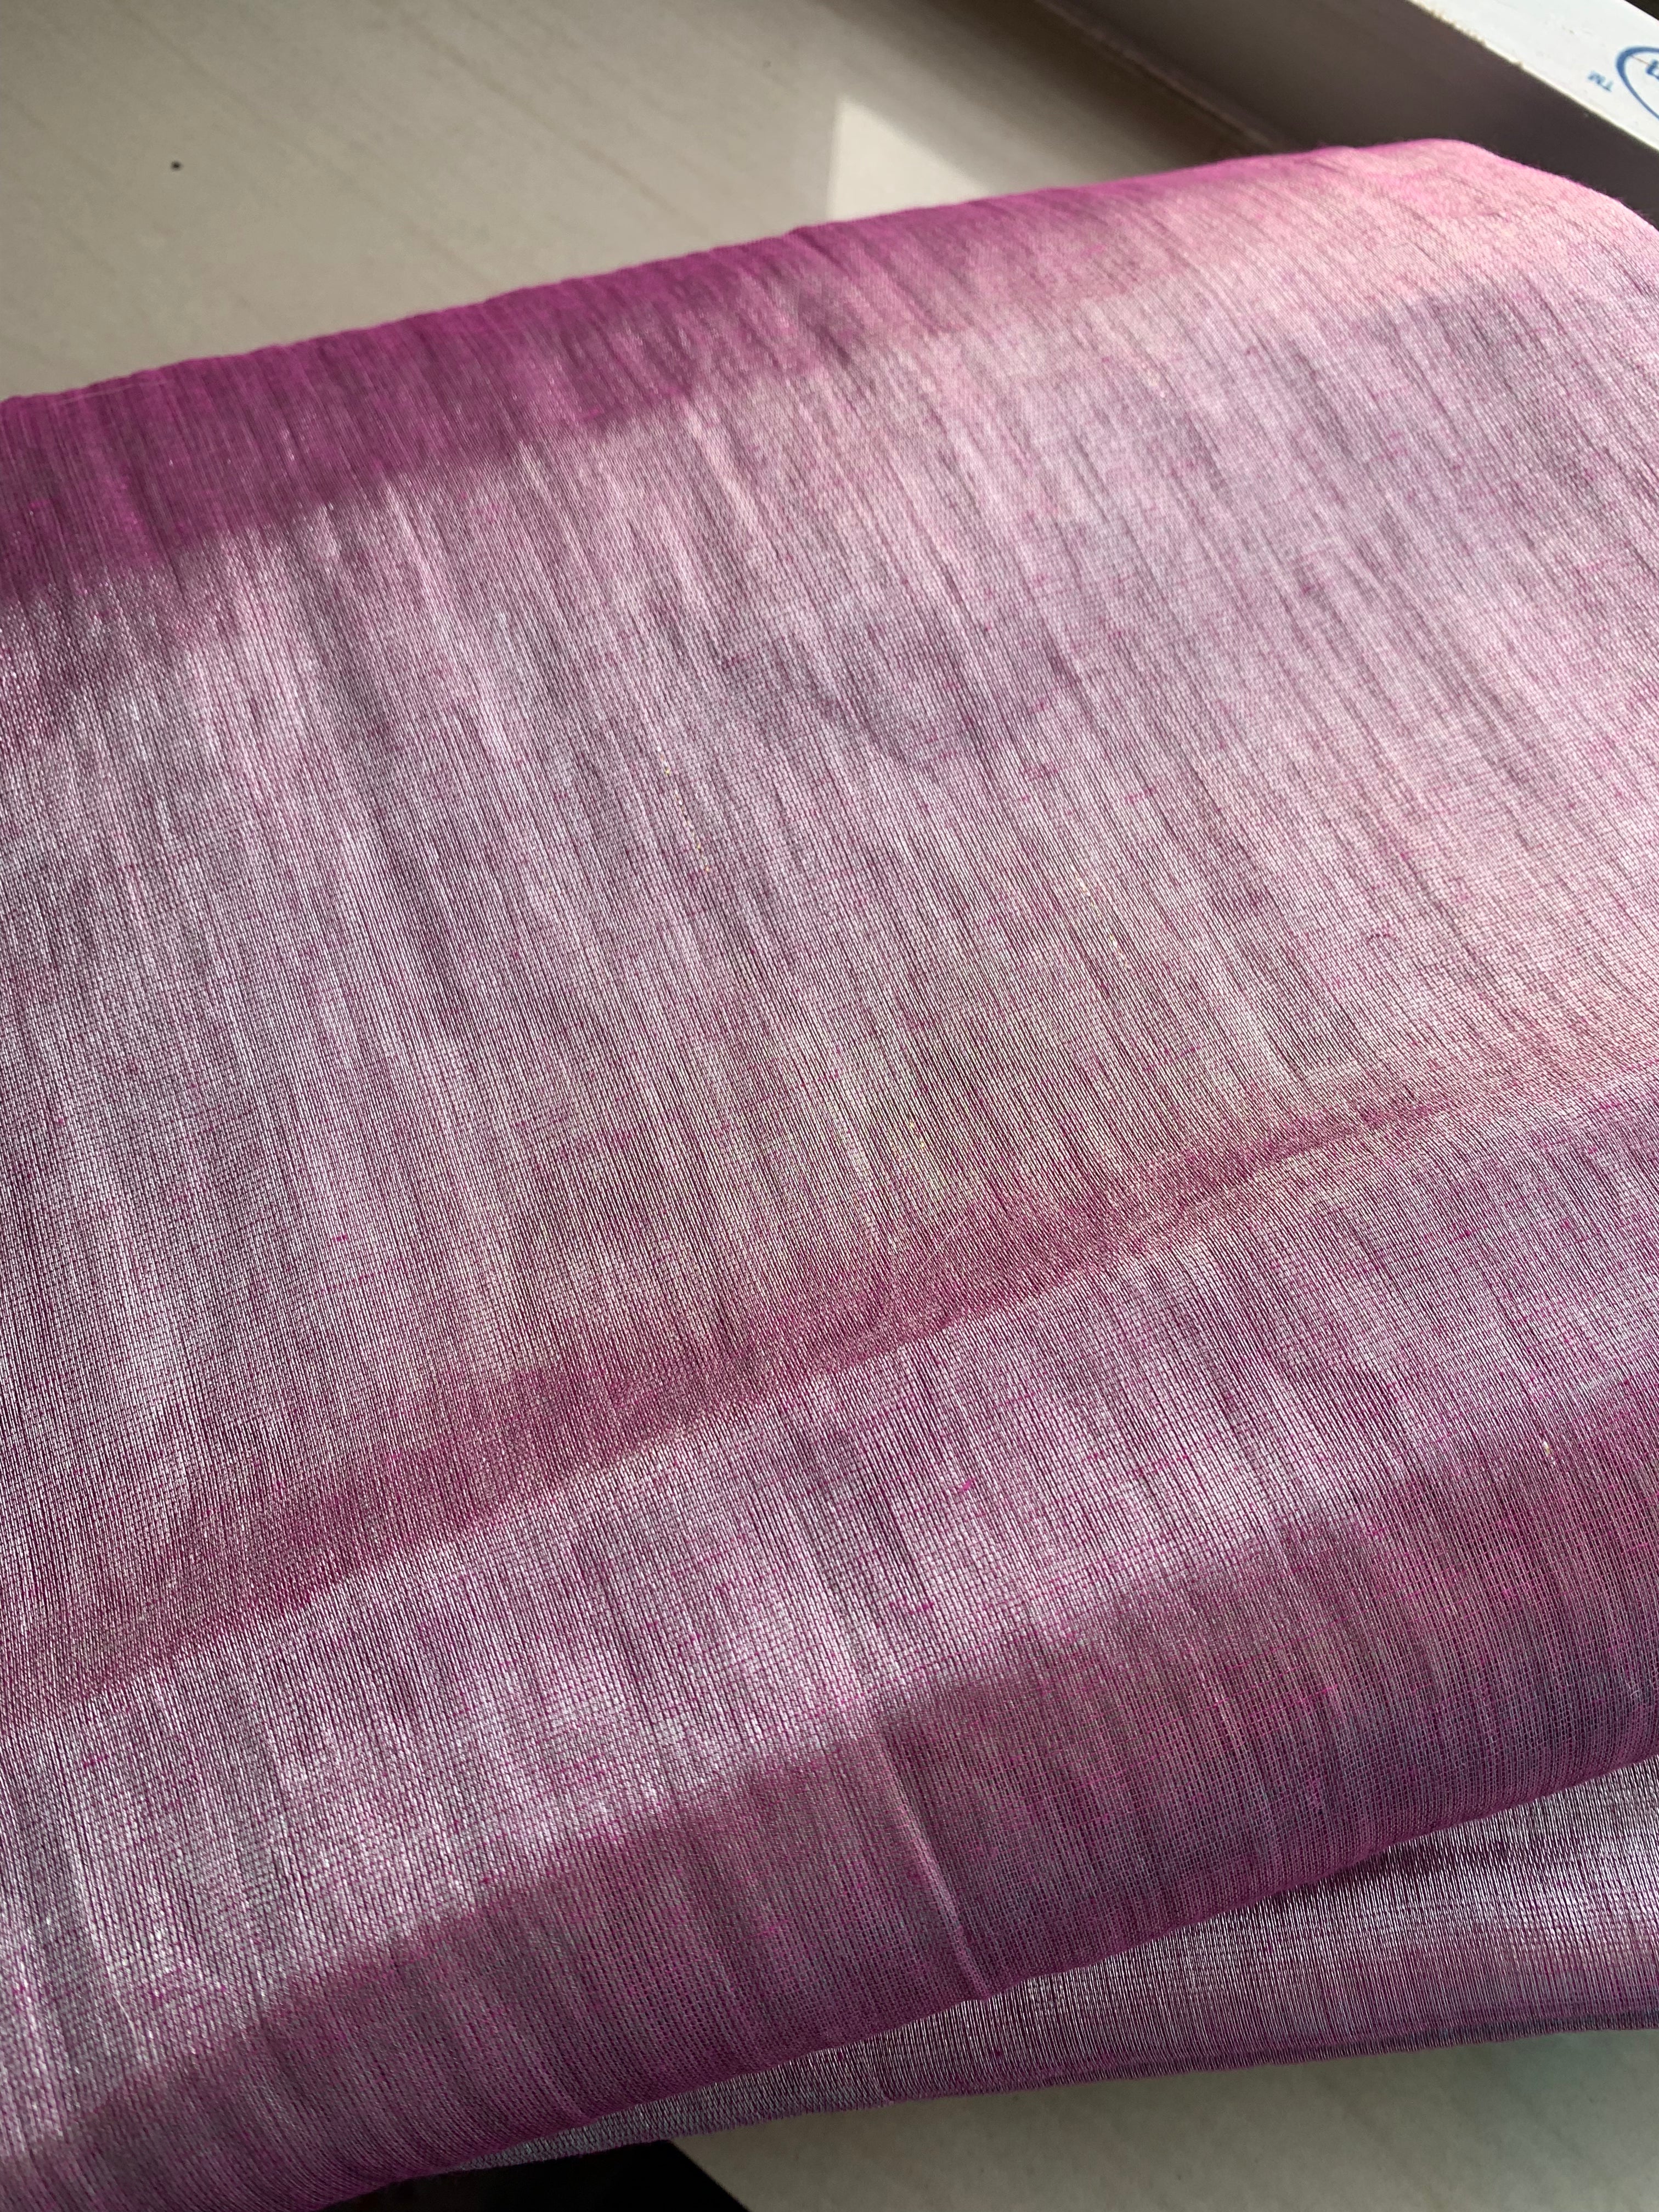 Lavender handwoven fabric